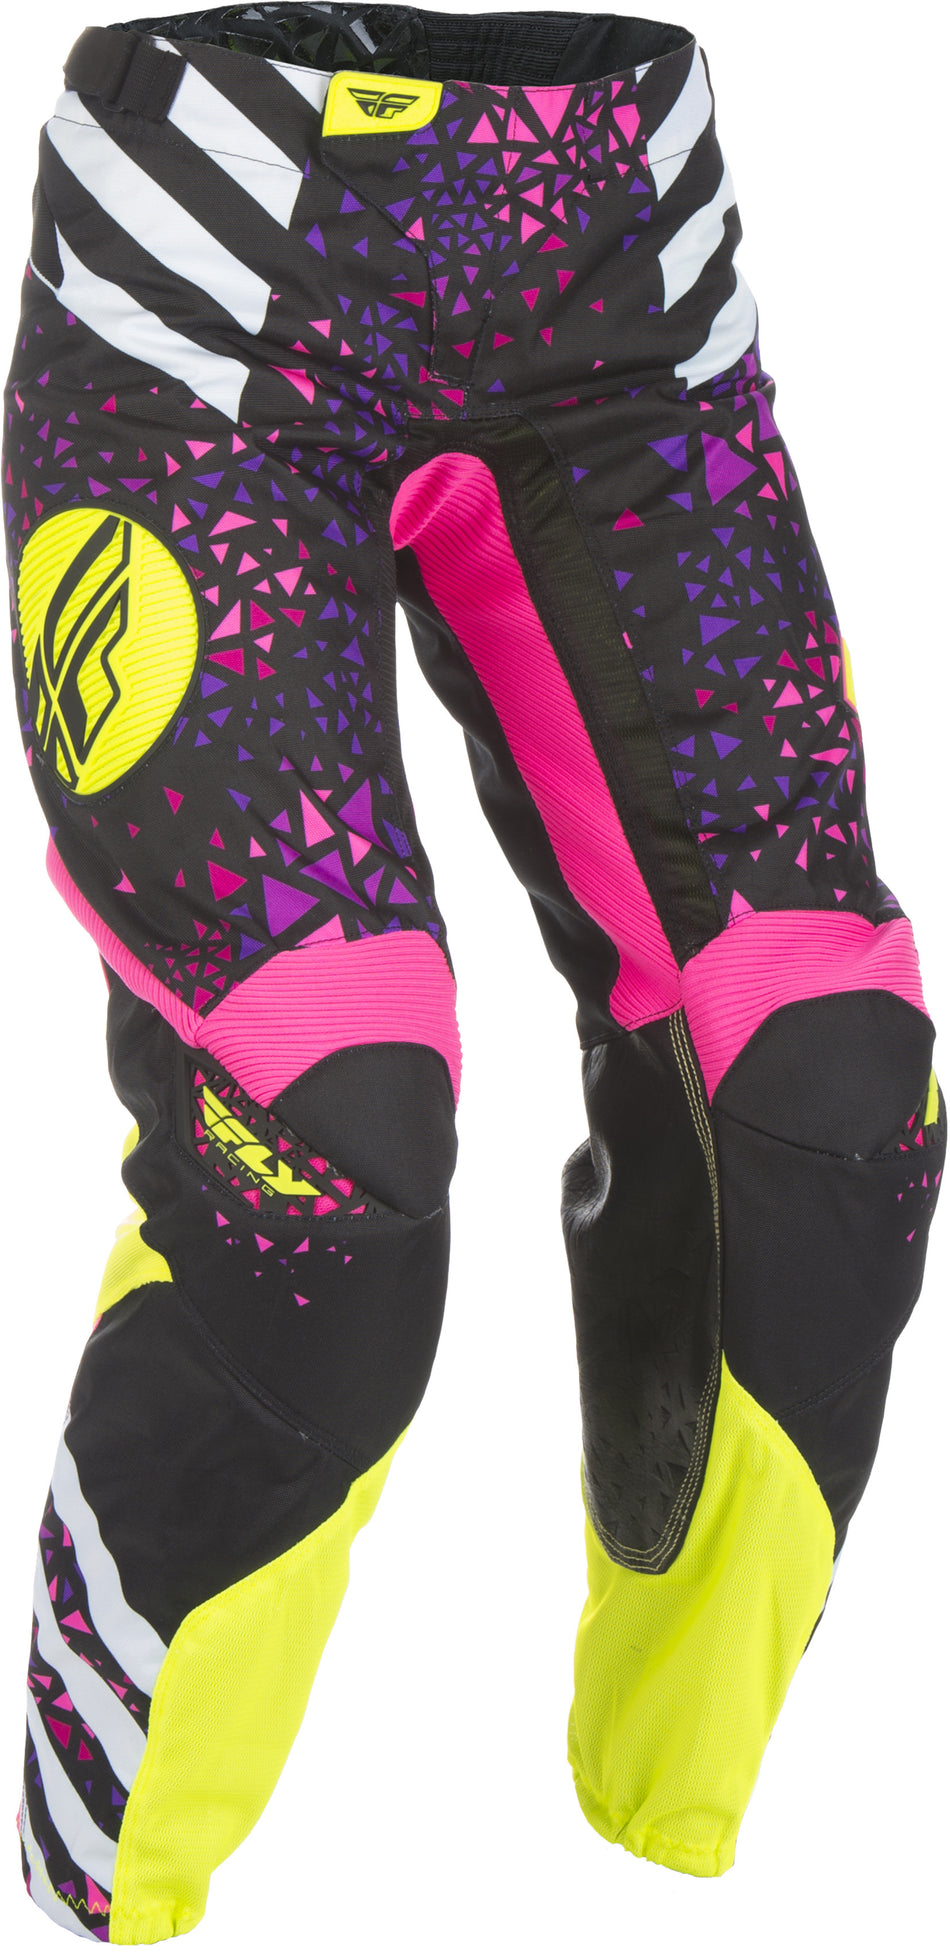 FLY RACING Kinetic Women's Race Pants Neon/Pink/Hi-Vis Sz 9/10 371-63908